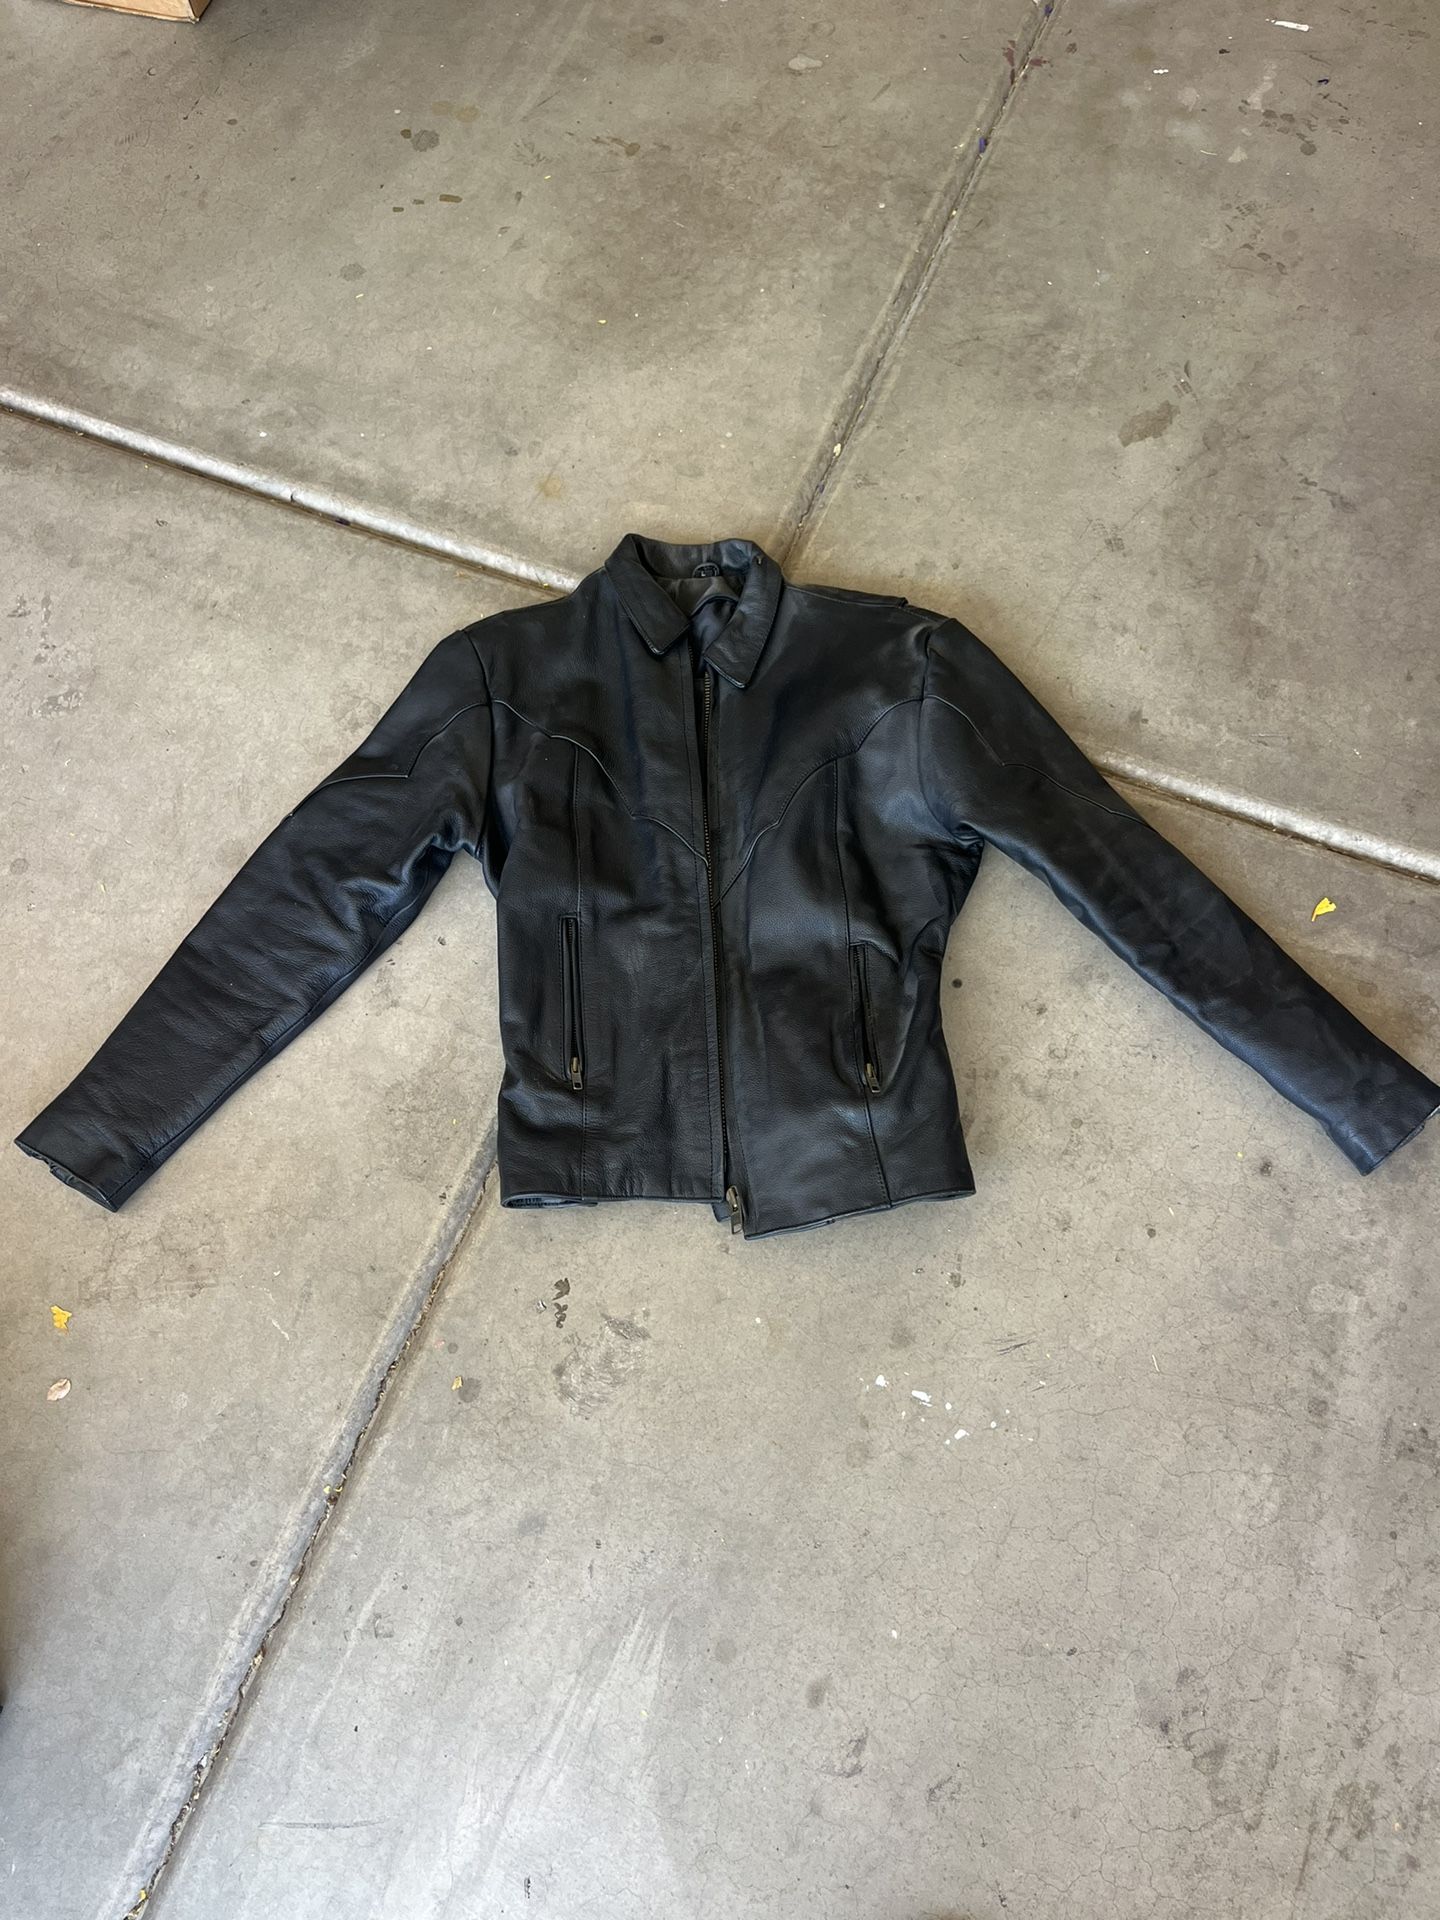 Woman’s  Leather Jacket Large